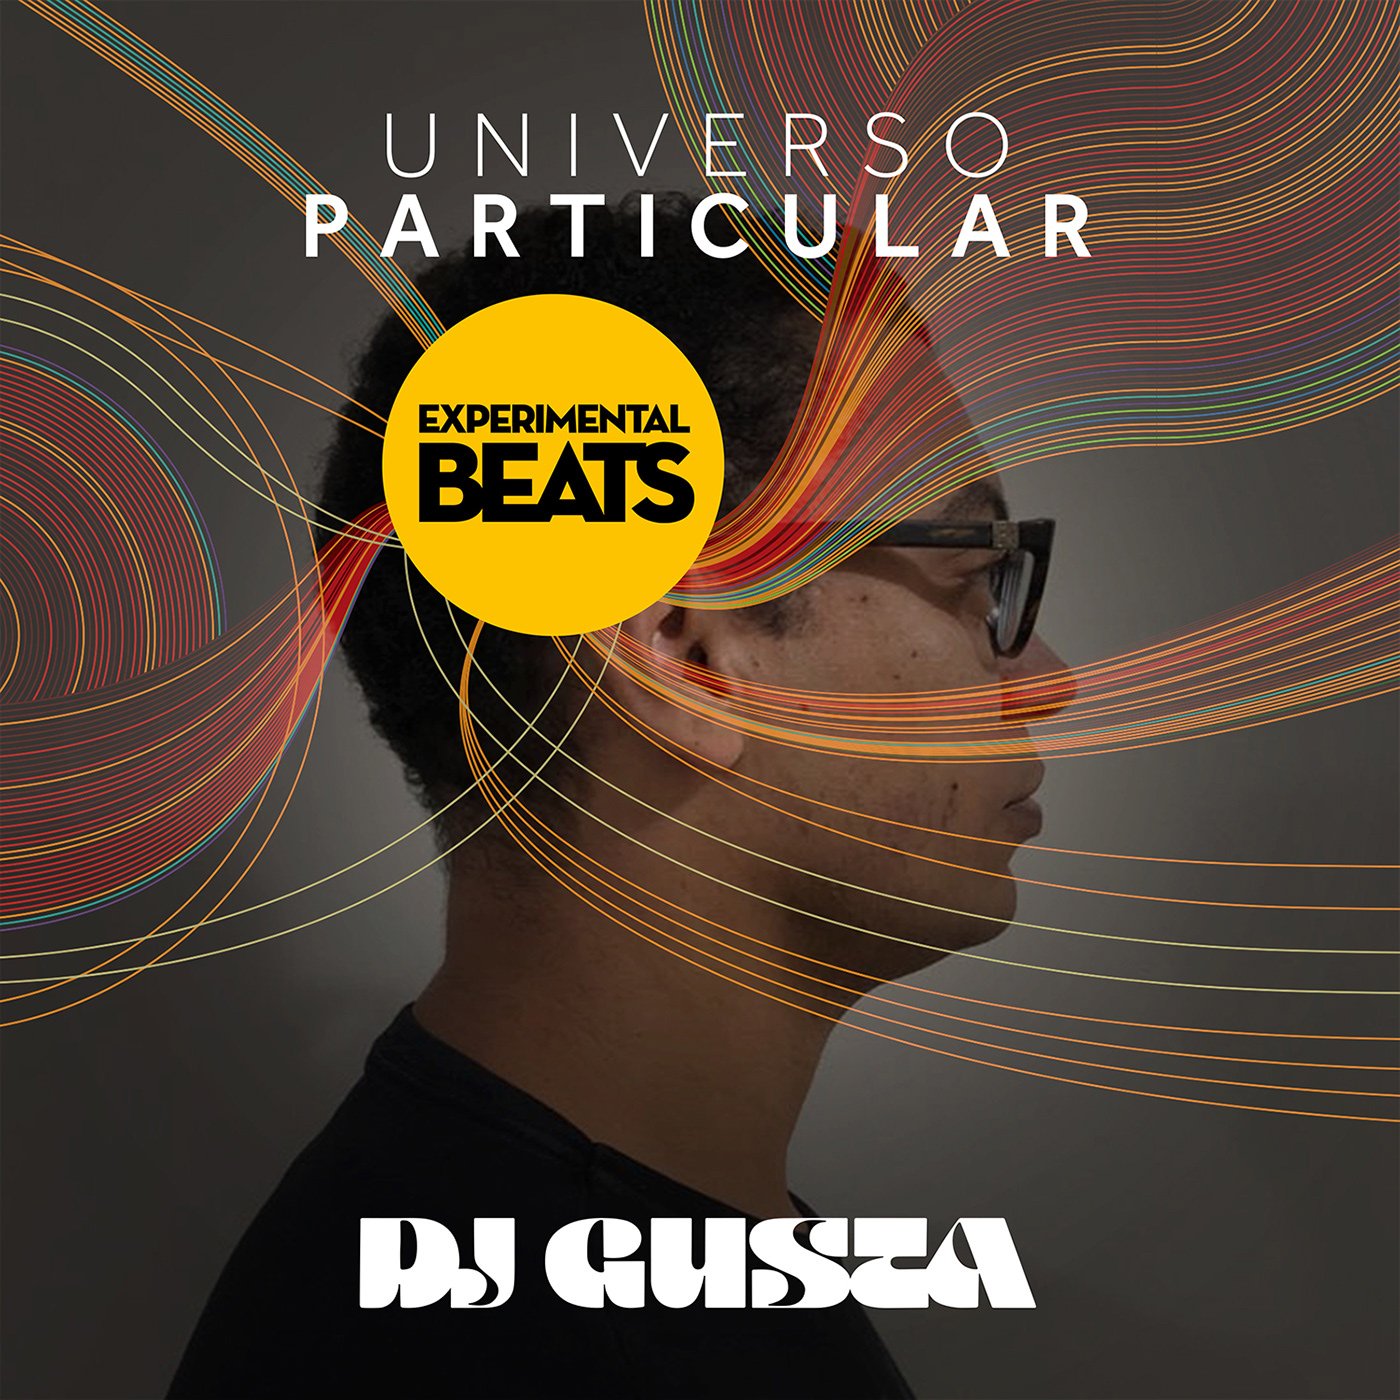 universo experimental Particular musica vinyl beats dj gusta Experimental Beats gustavo dantas universo particular